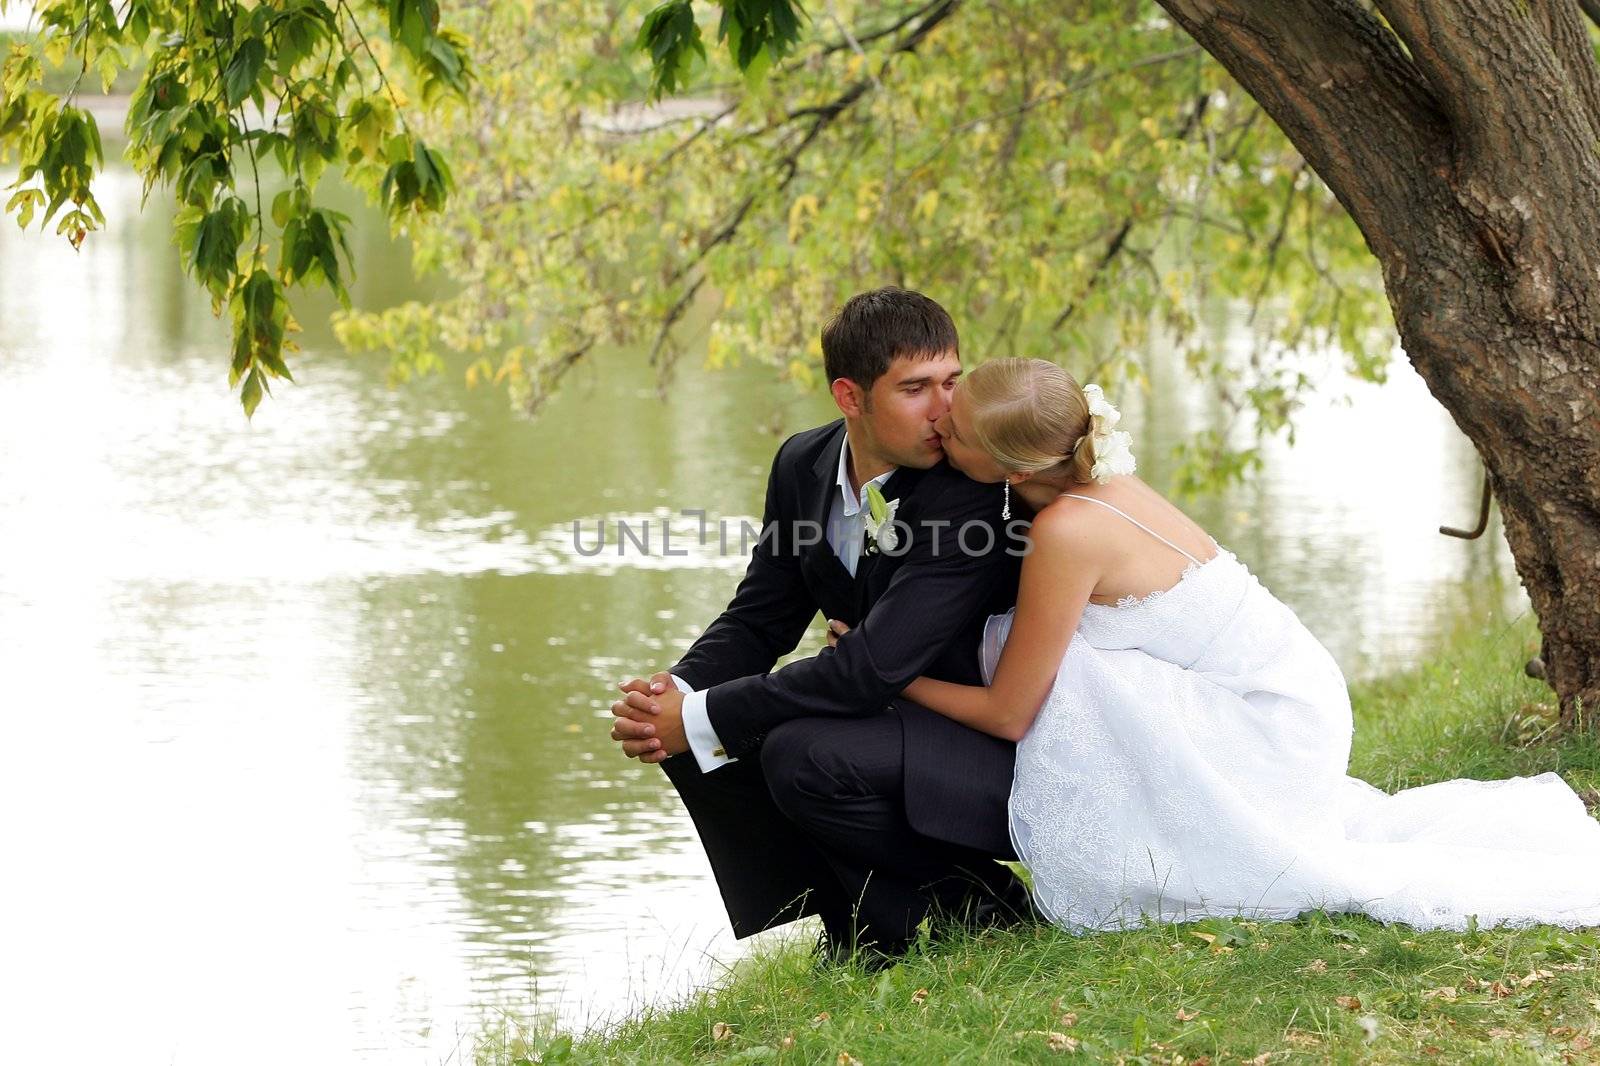 Newlywed couple kissingby lake in romantic scene.